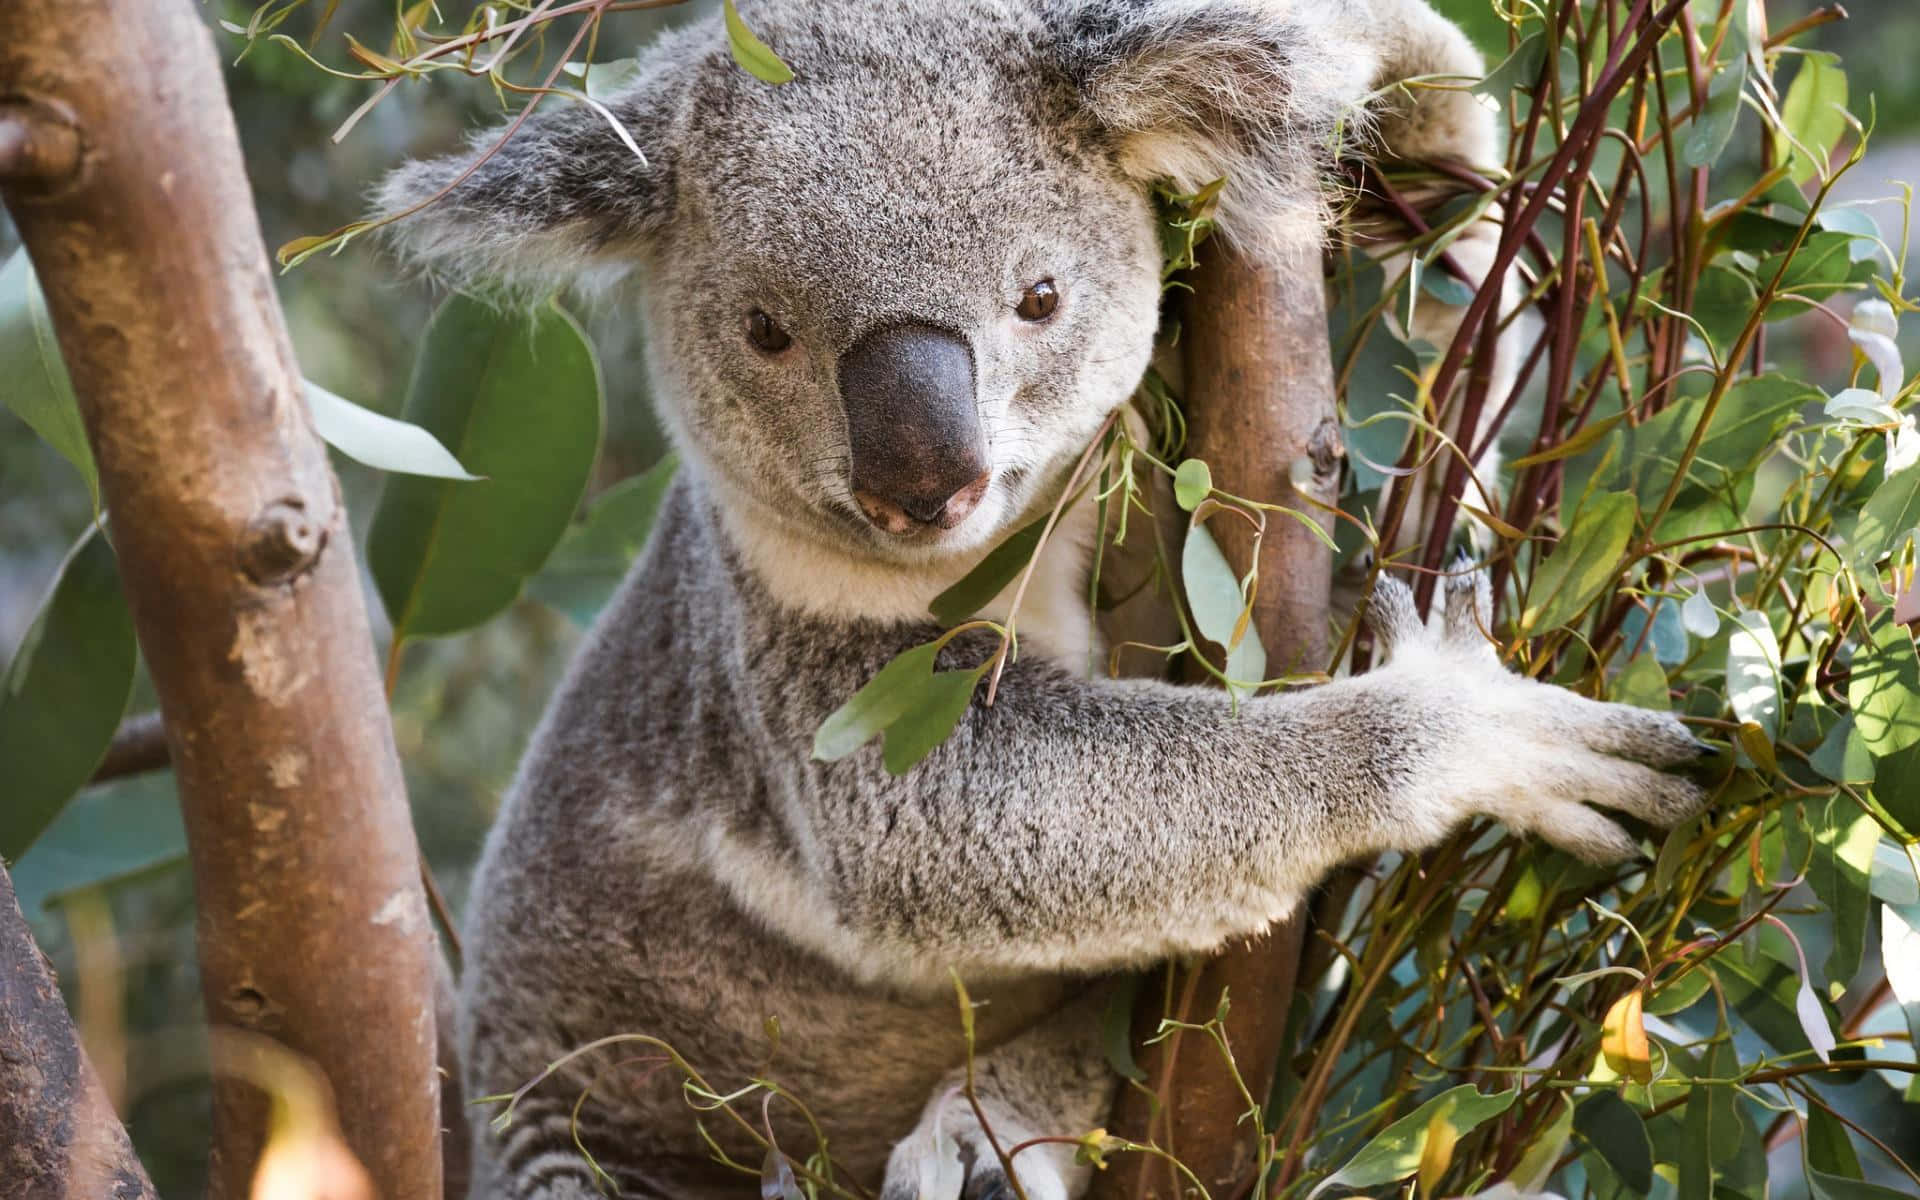 Adorable Koala Bear Lazing Under the Shade of an Eucalyptus Tree